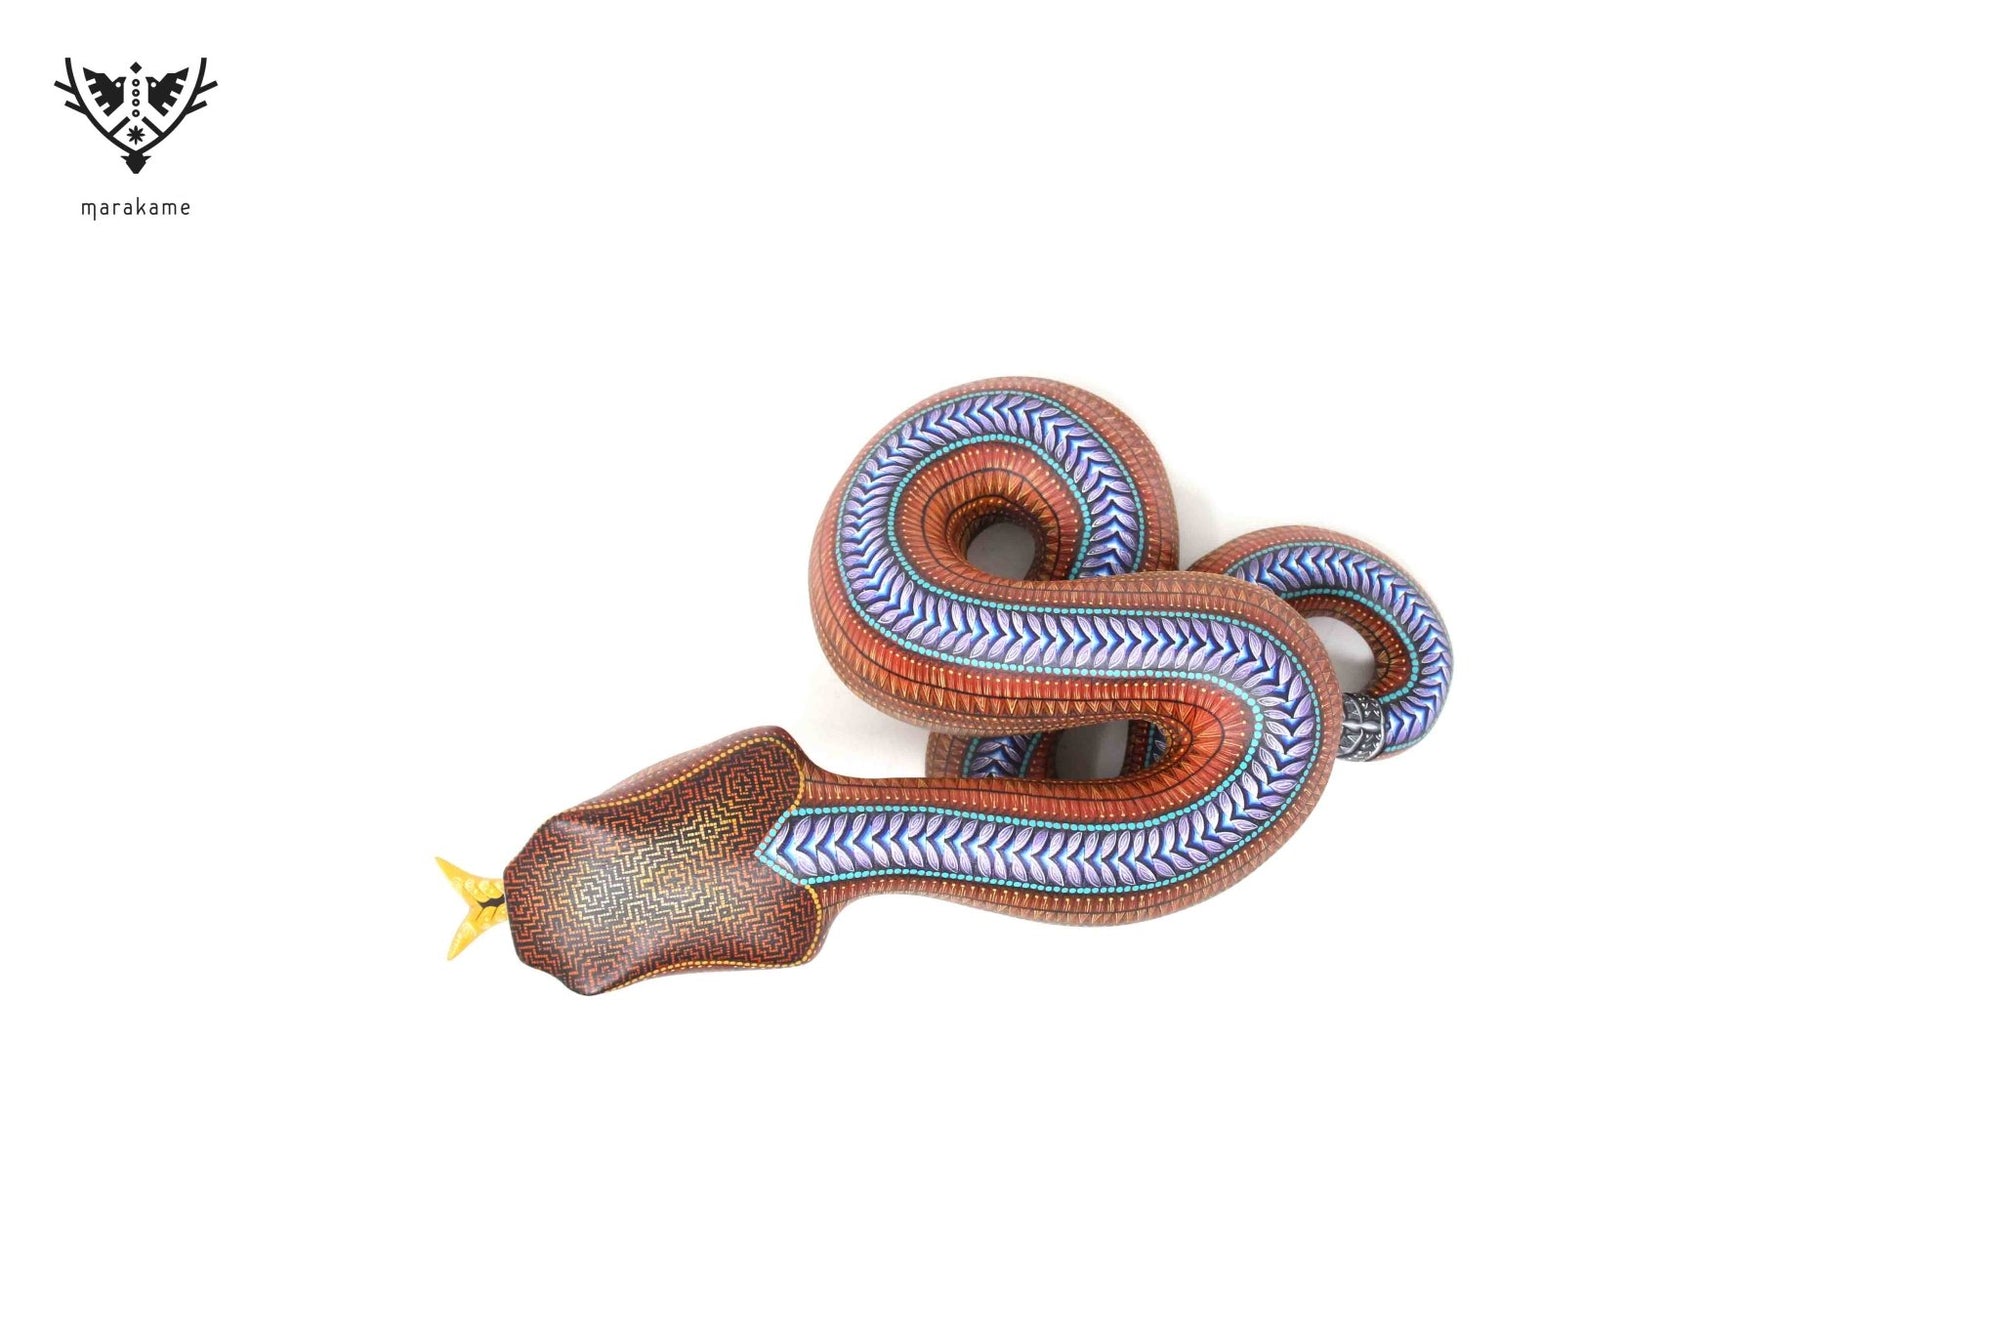 Alebrije serpiente - Beenda' I - Arte Huichol - Marakame